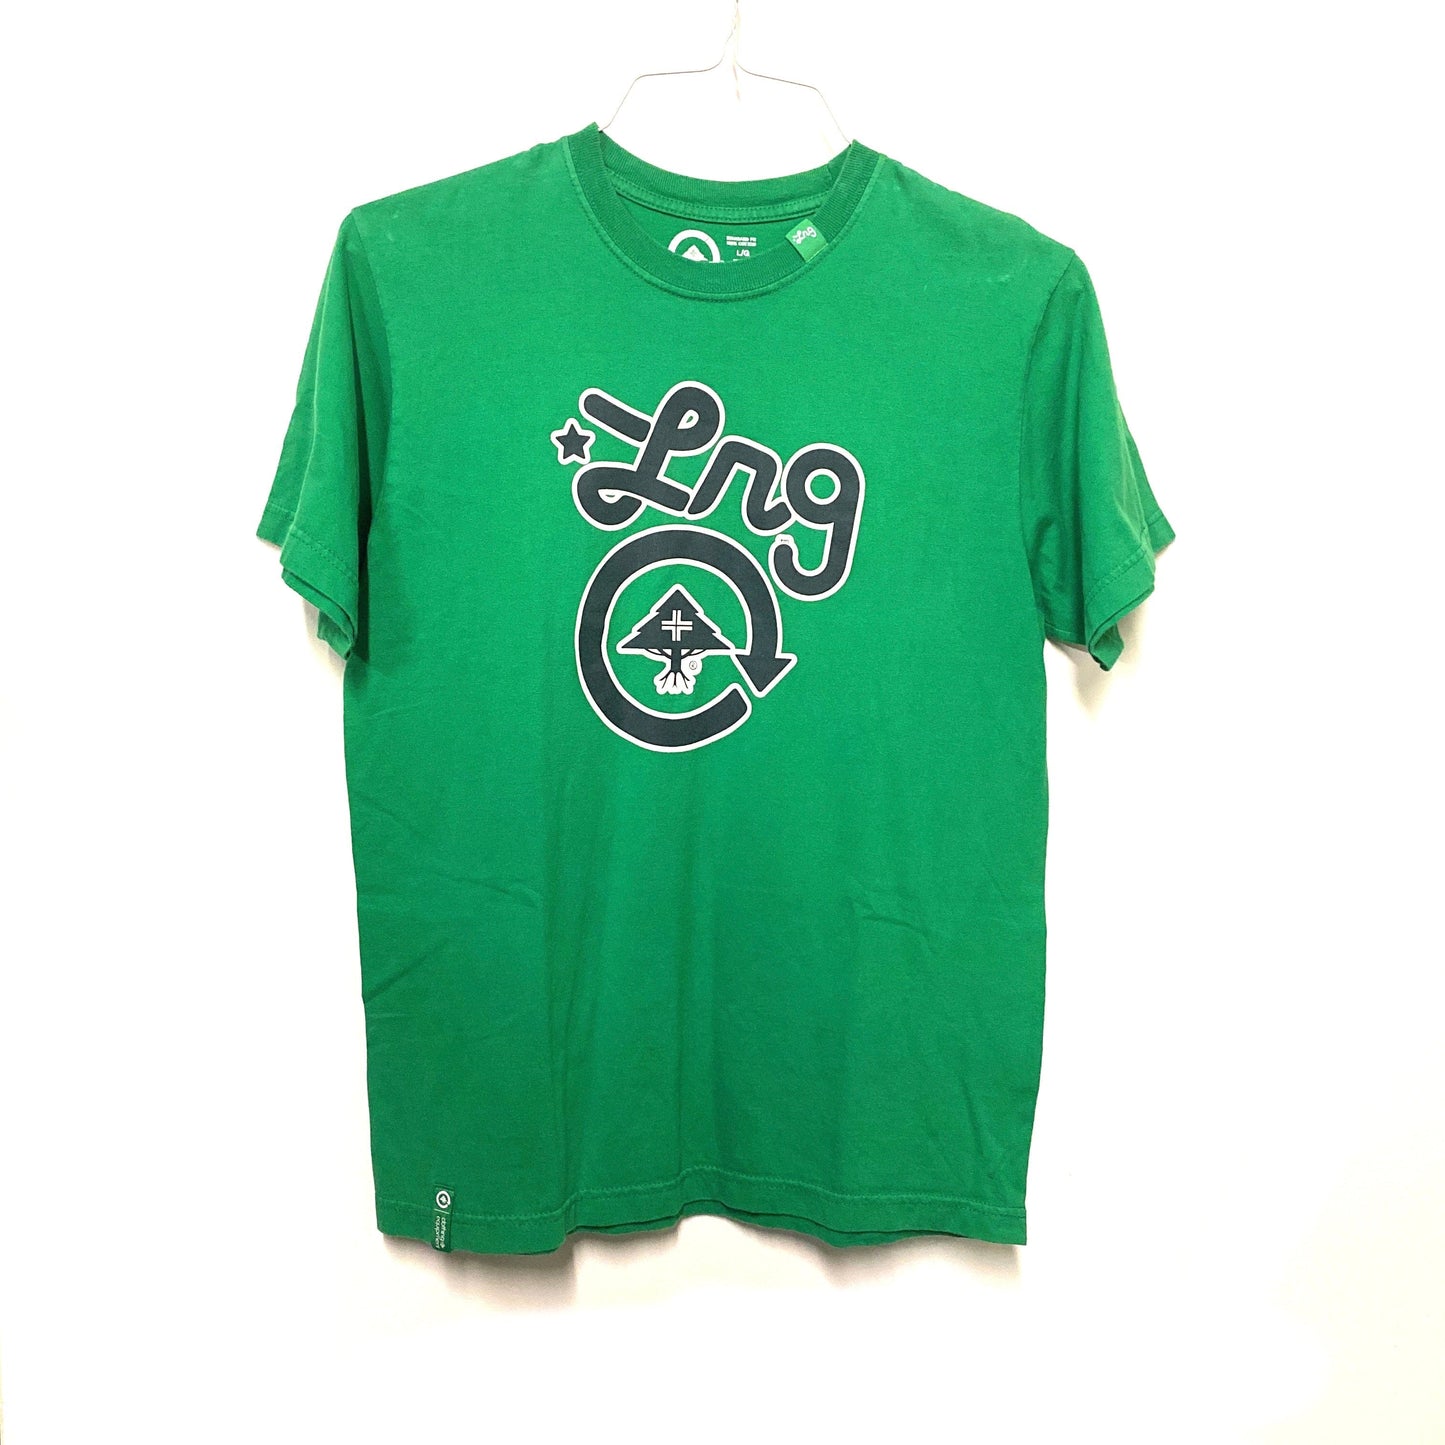 LRG Premium Fit Mens Size L Green Graphic T-Shirt S/s